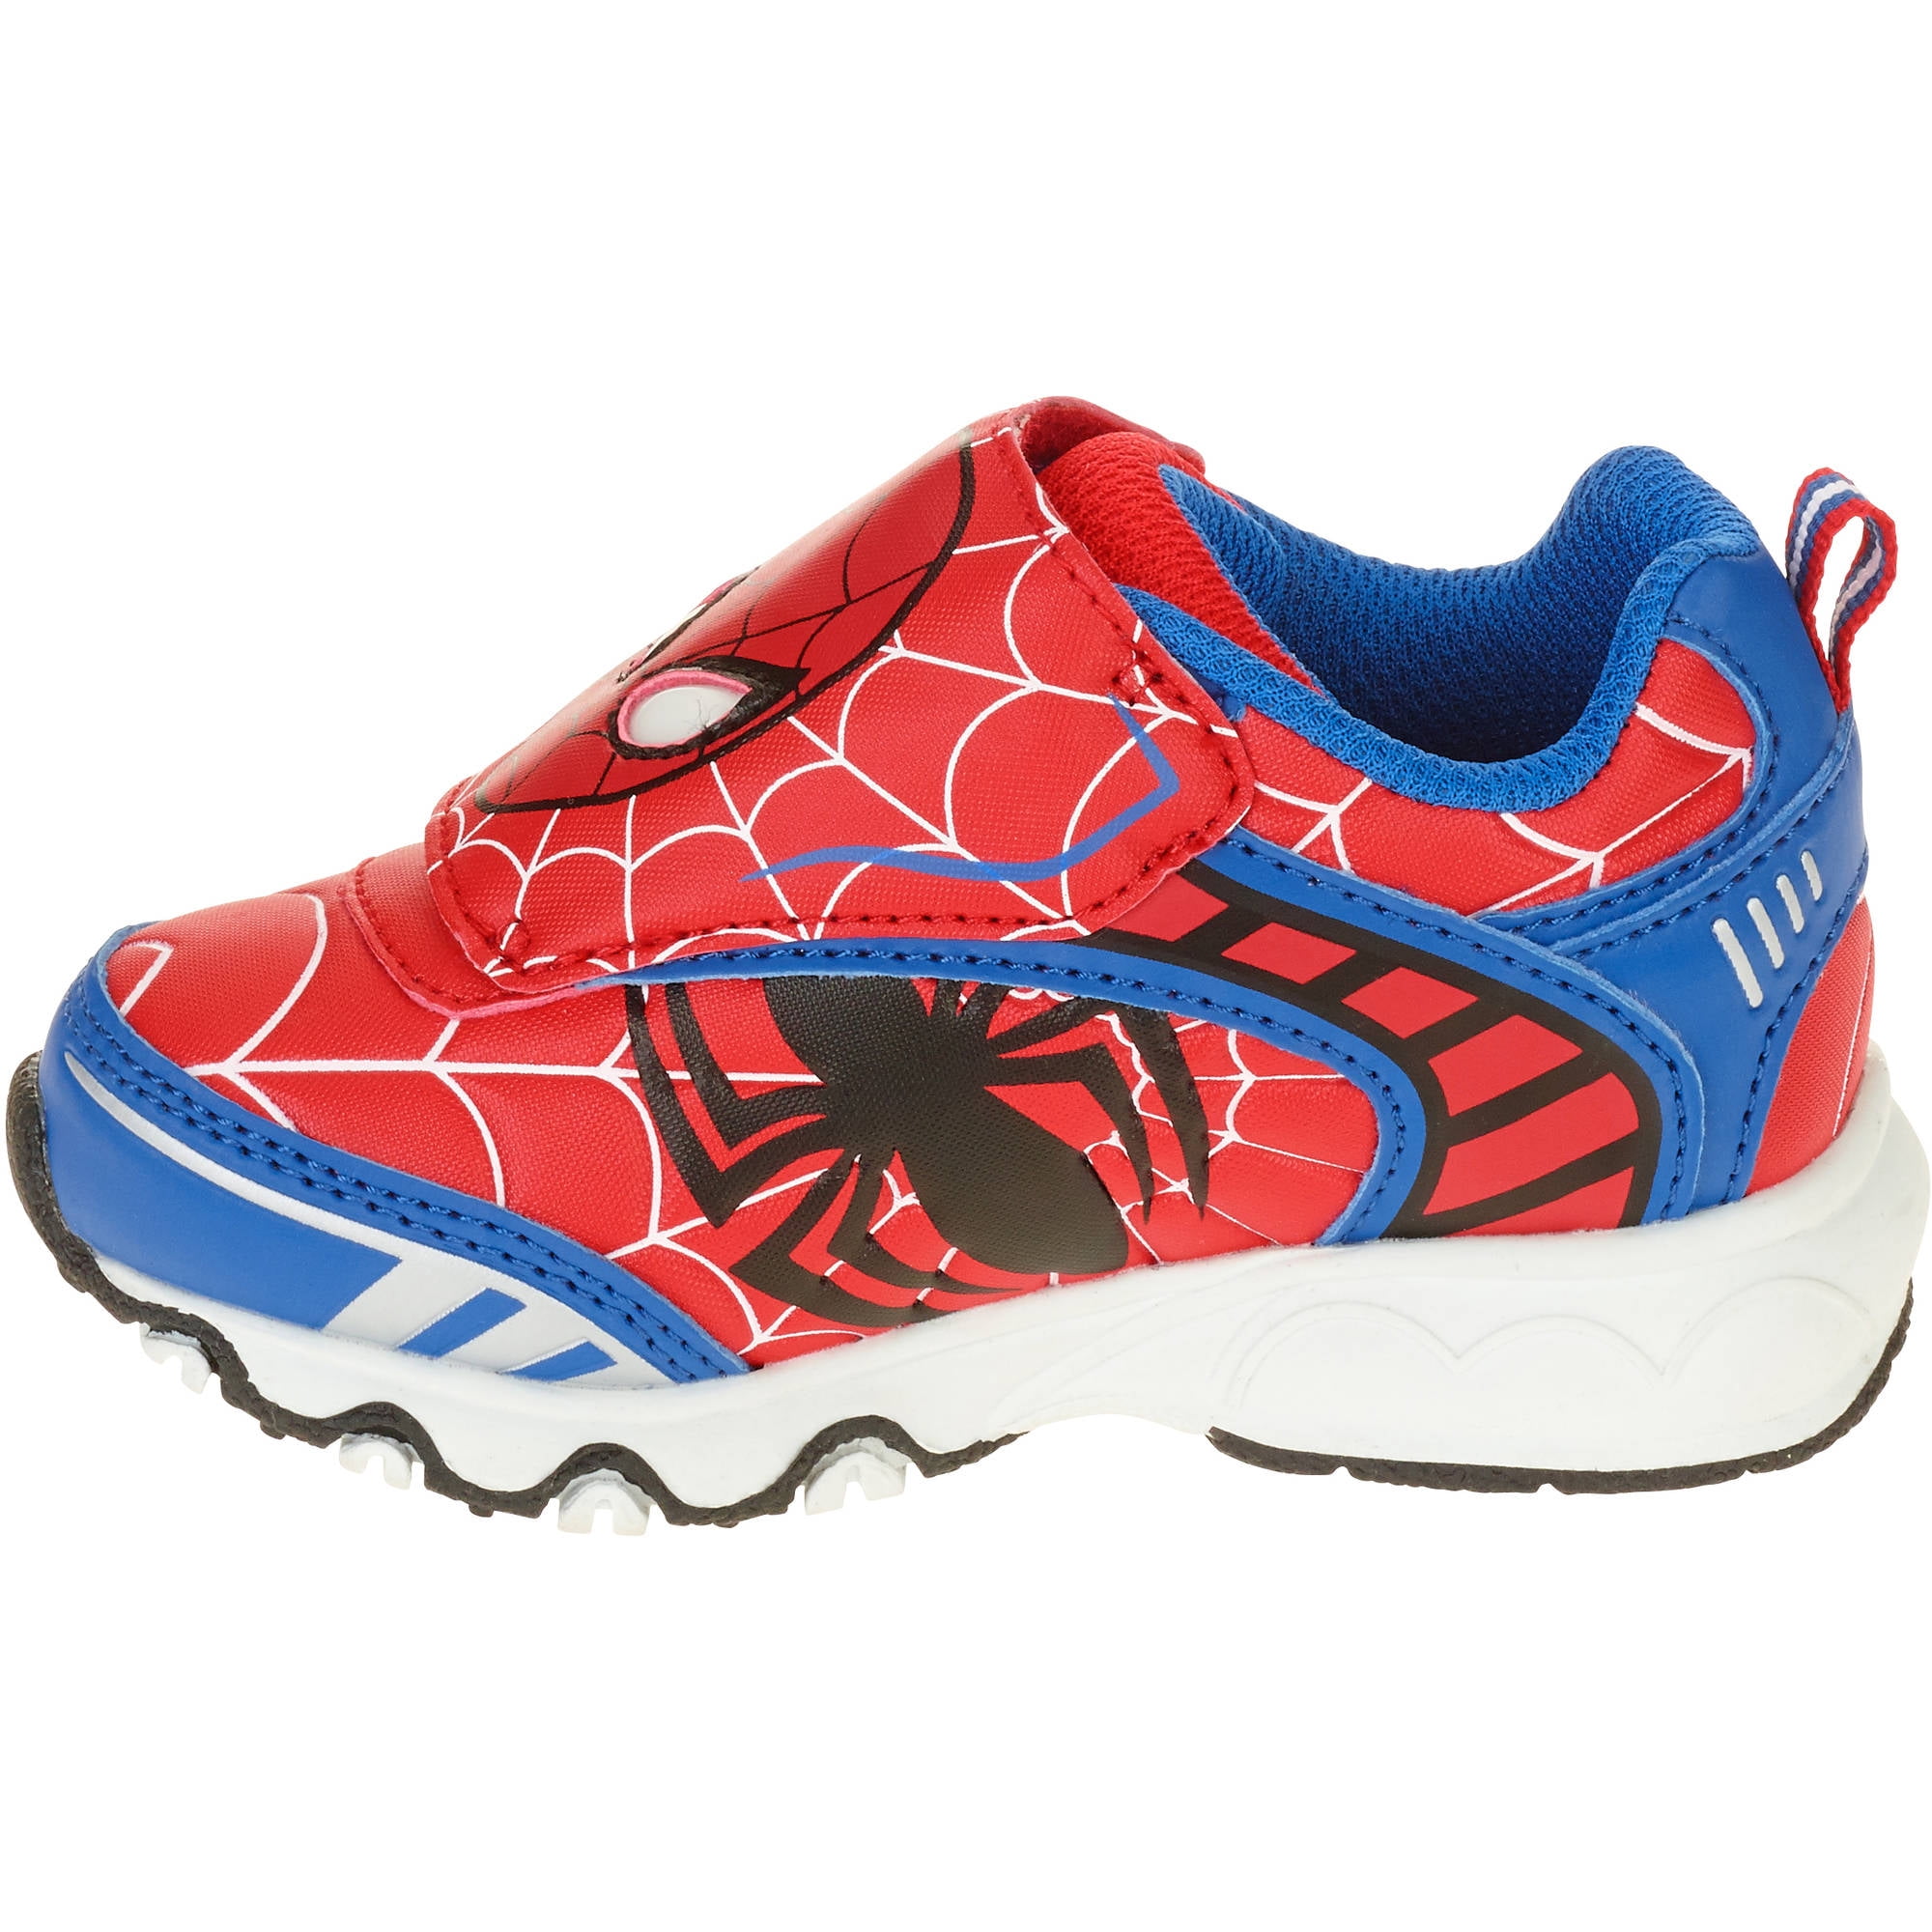 Spider-Man Toddler Boys' Athletic Shoe 